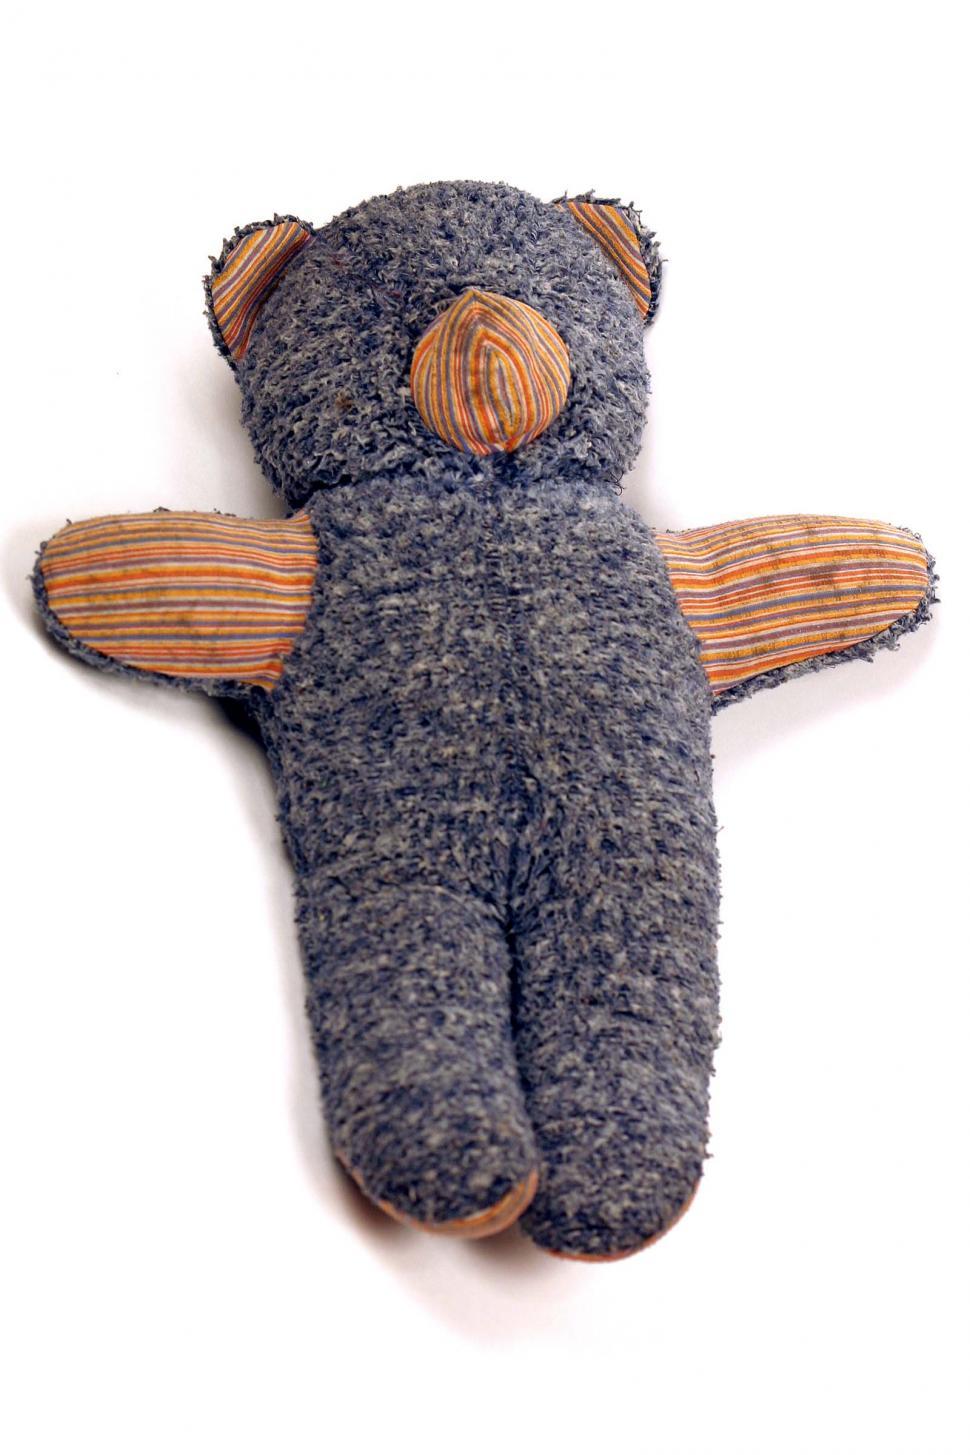 Free Image of vintage teddy bear loved worn stuffed animal fuzzy toy 